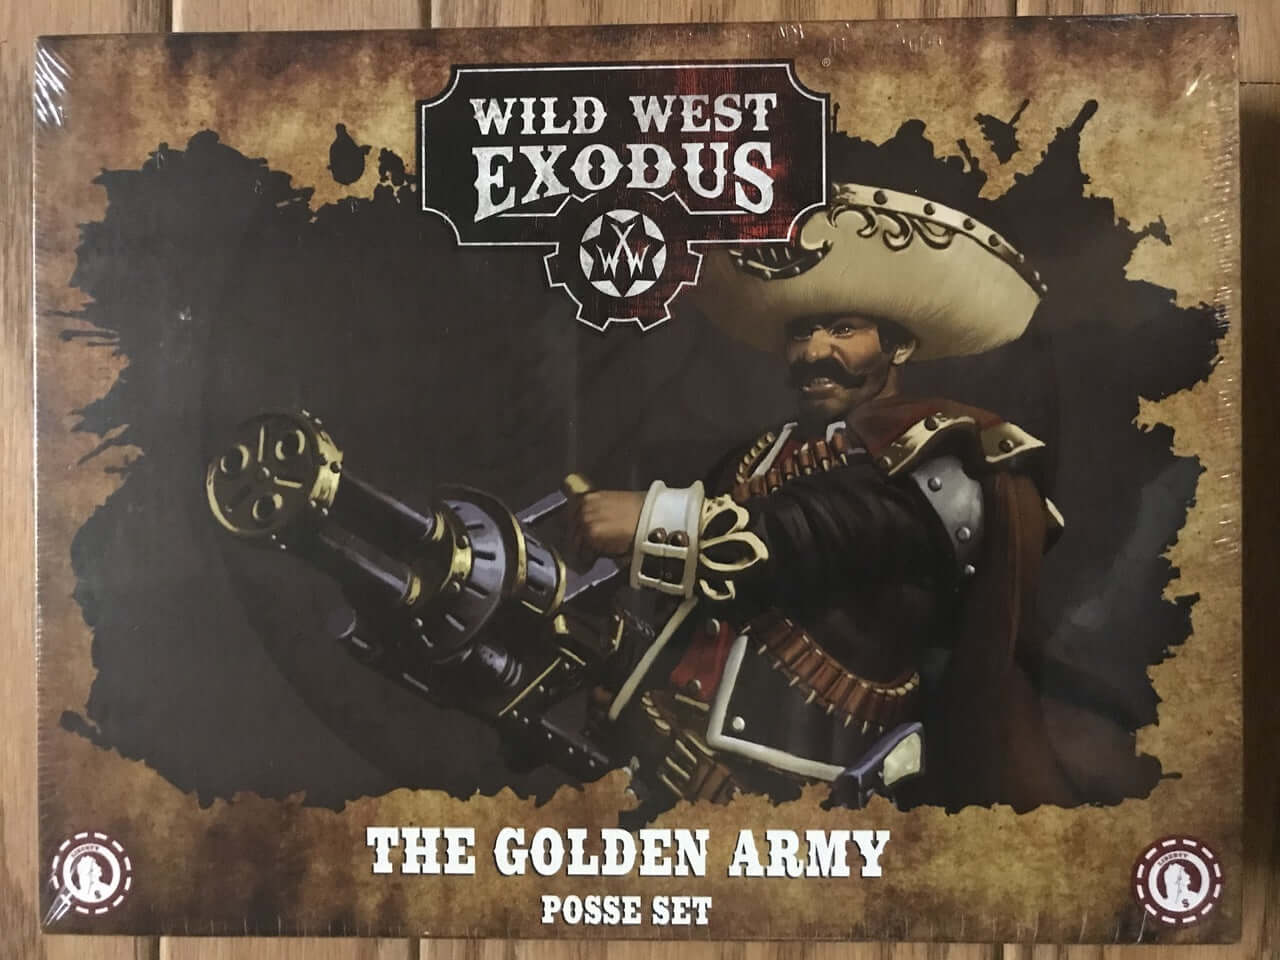 The Golden Army Posse Wild West Exodus